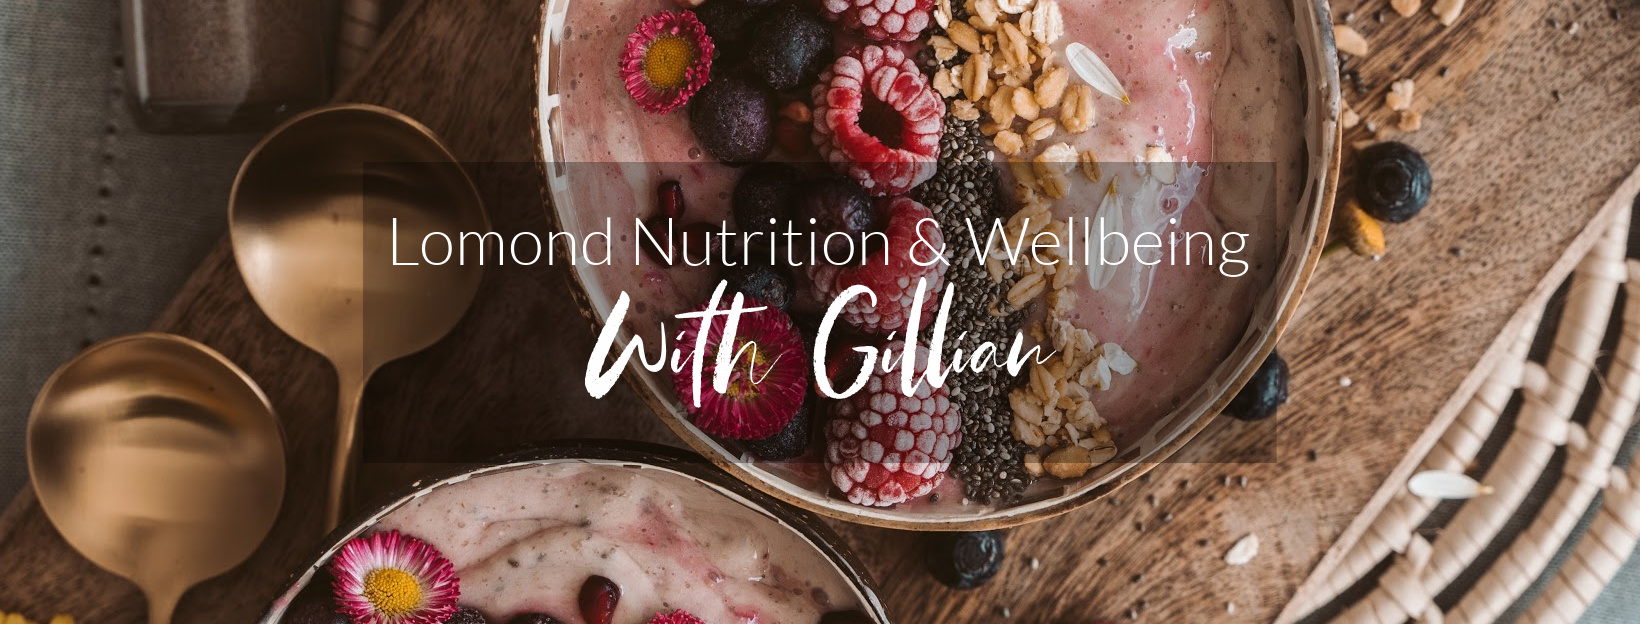 Lomond Nutrition & Wellbeing